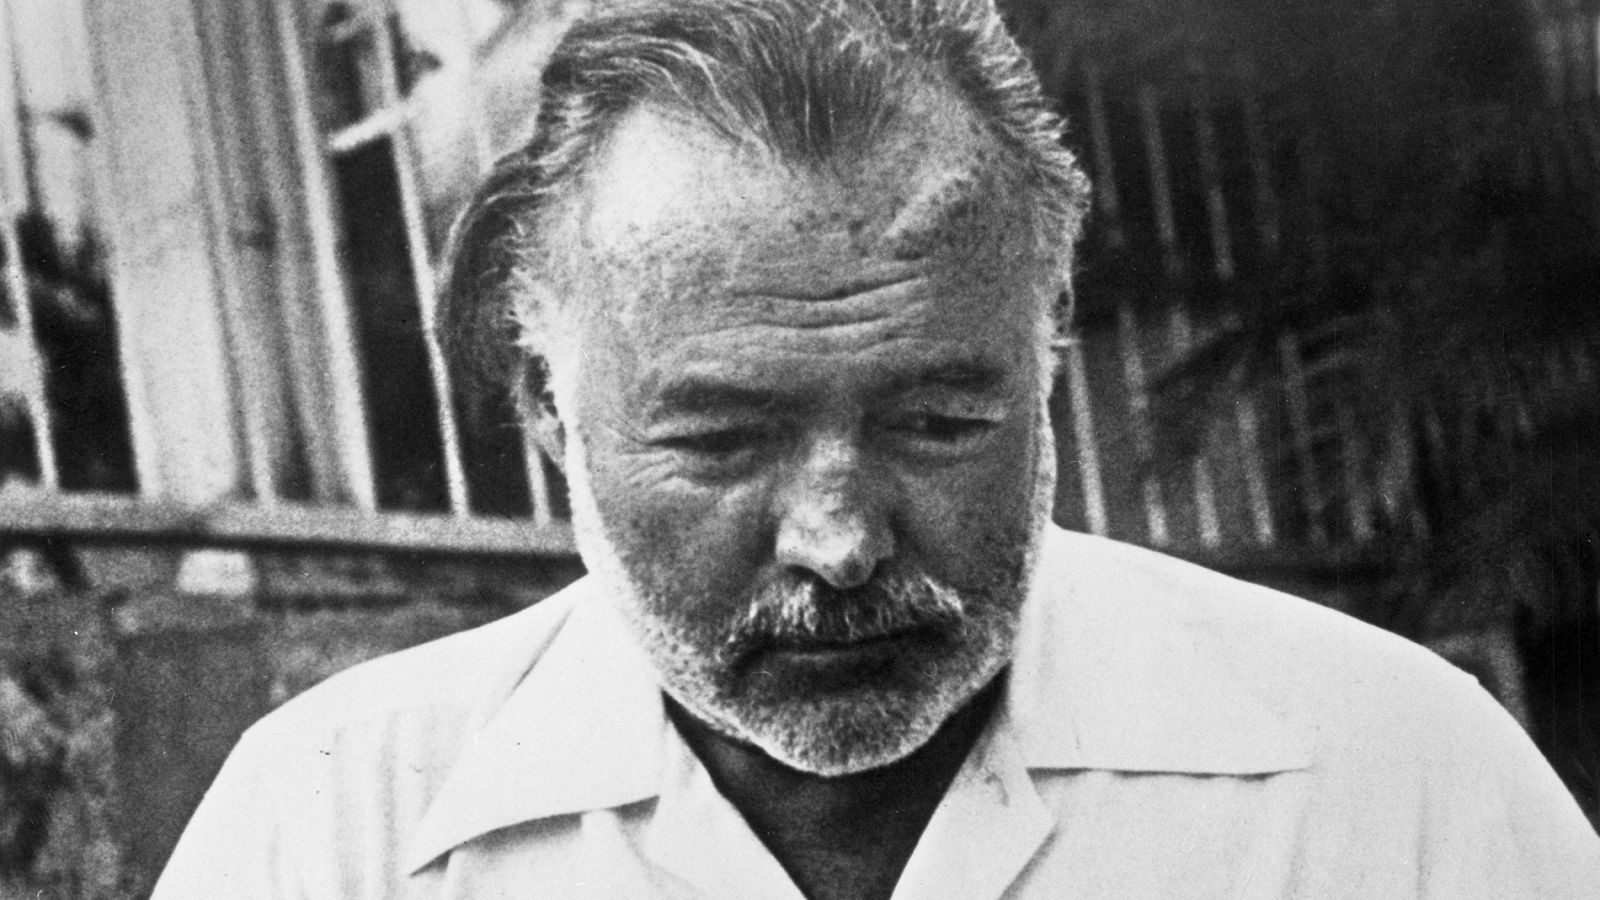 Telediario 1: Publican un relato inédito de Hemingway | RTVE Play